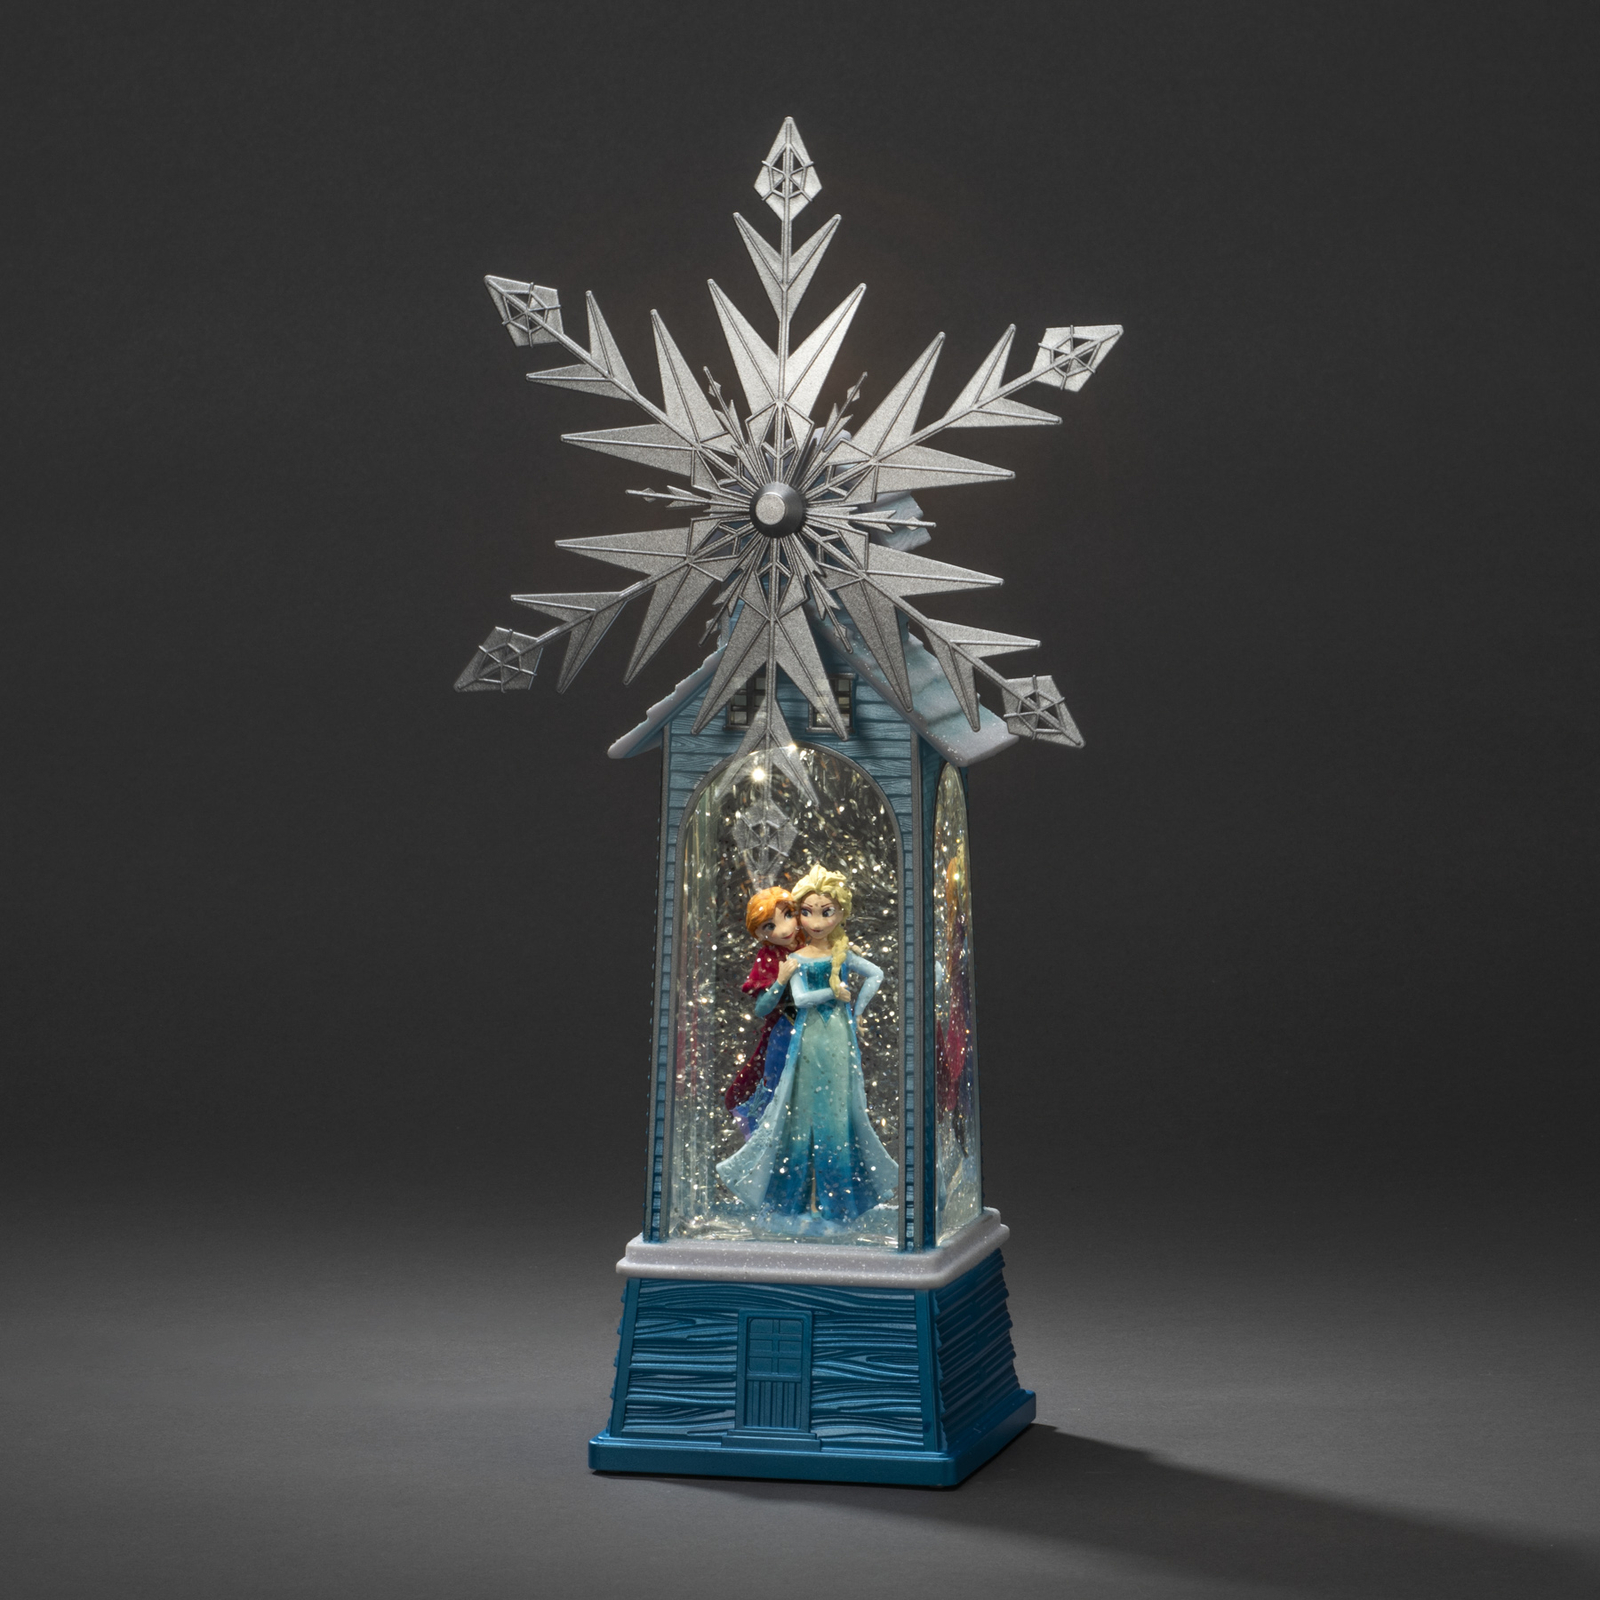 Disney's Frozen Elsa and Anna LED water lantern